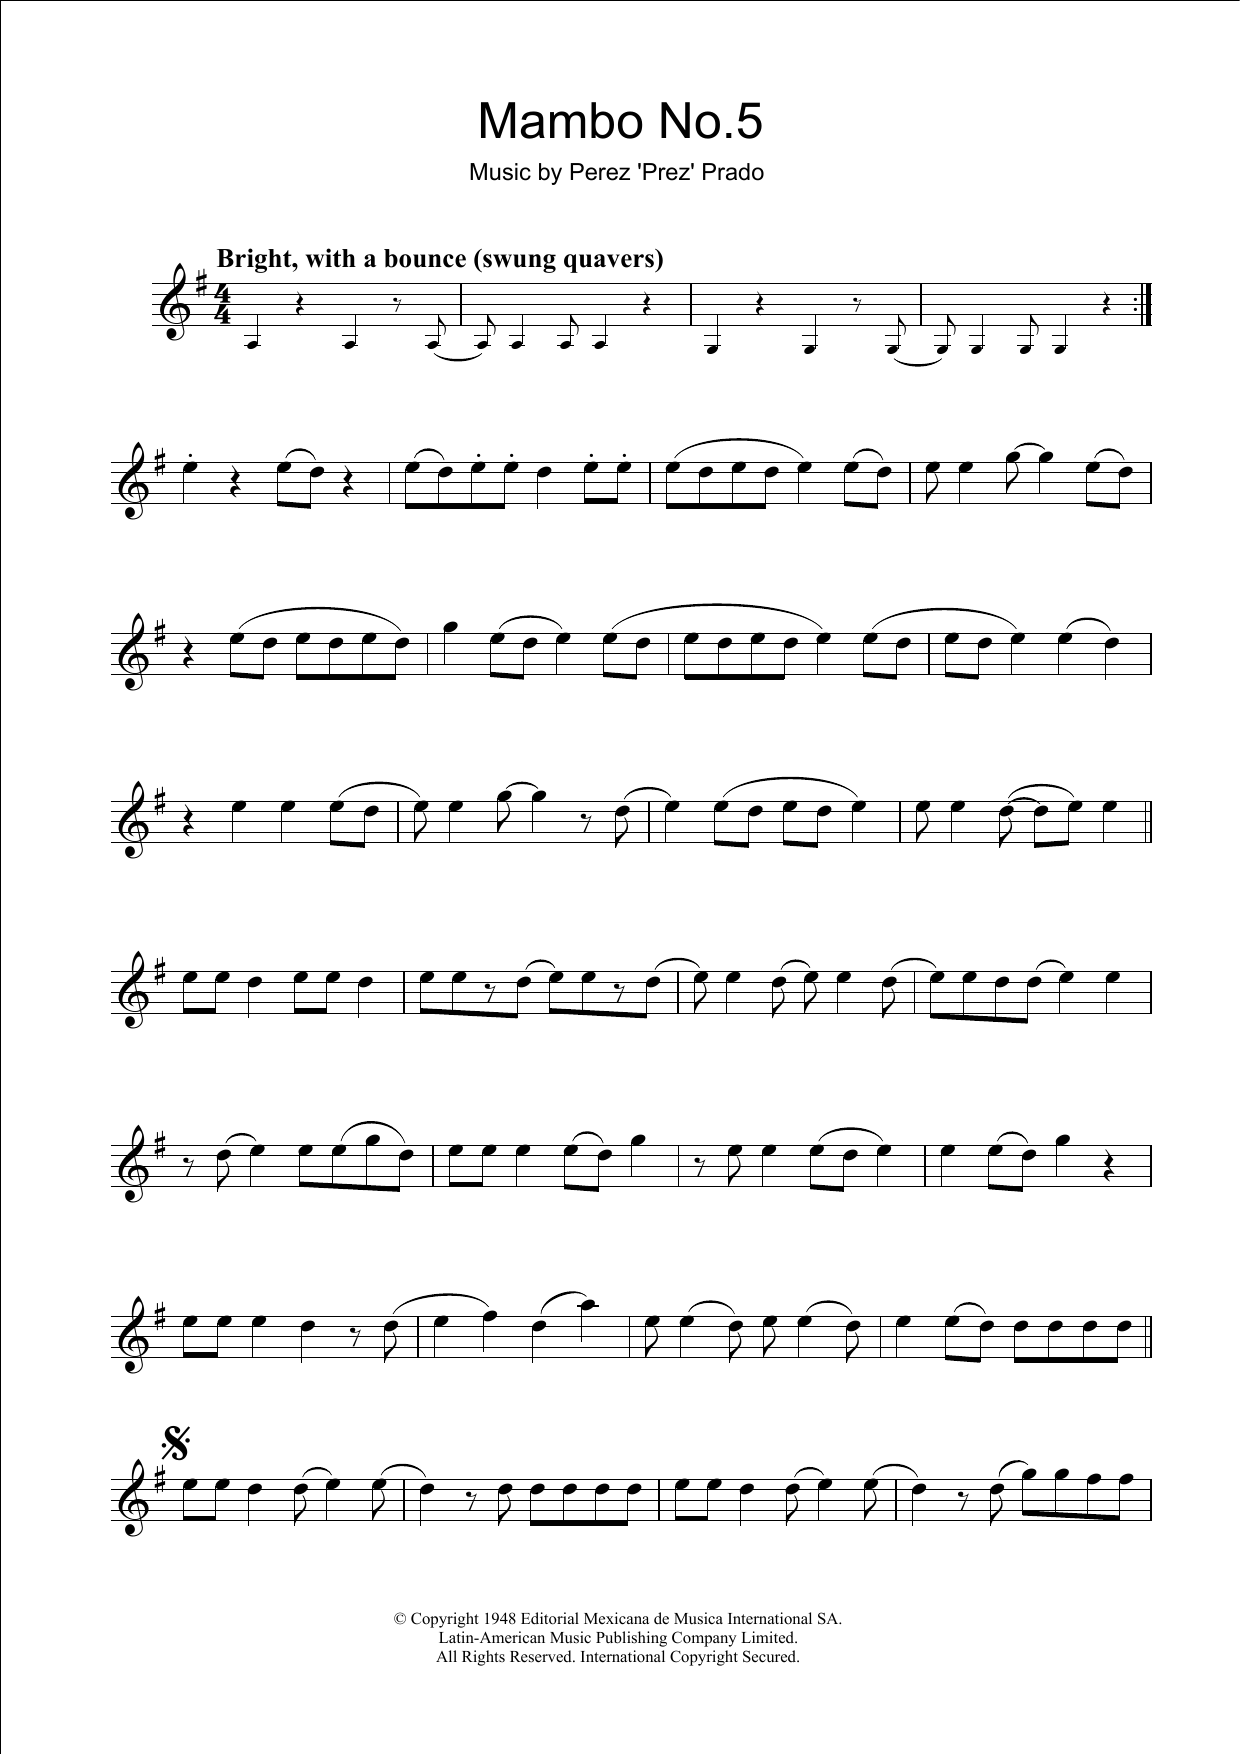 Perez Prado Mambo No. 5 Sheet Music Notes & Chords for Alto Saxophone - Download or Print PDF